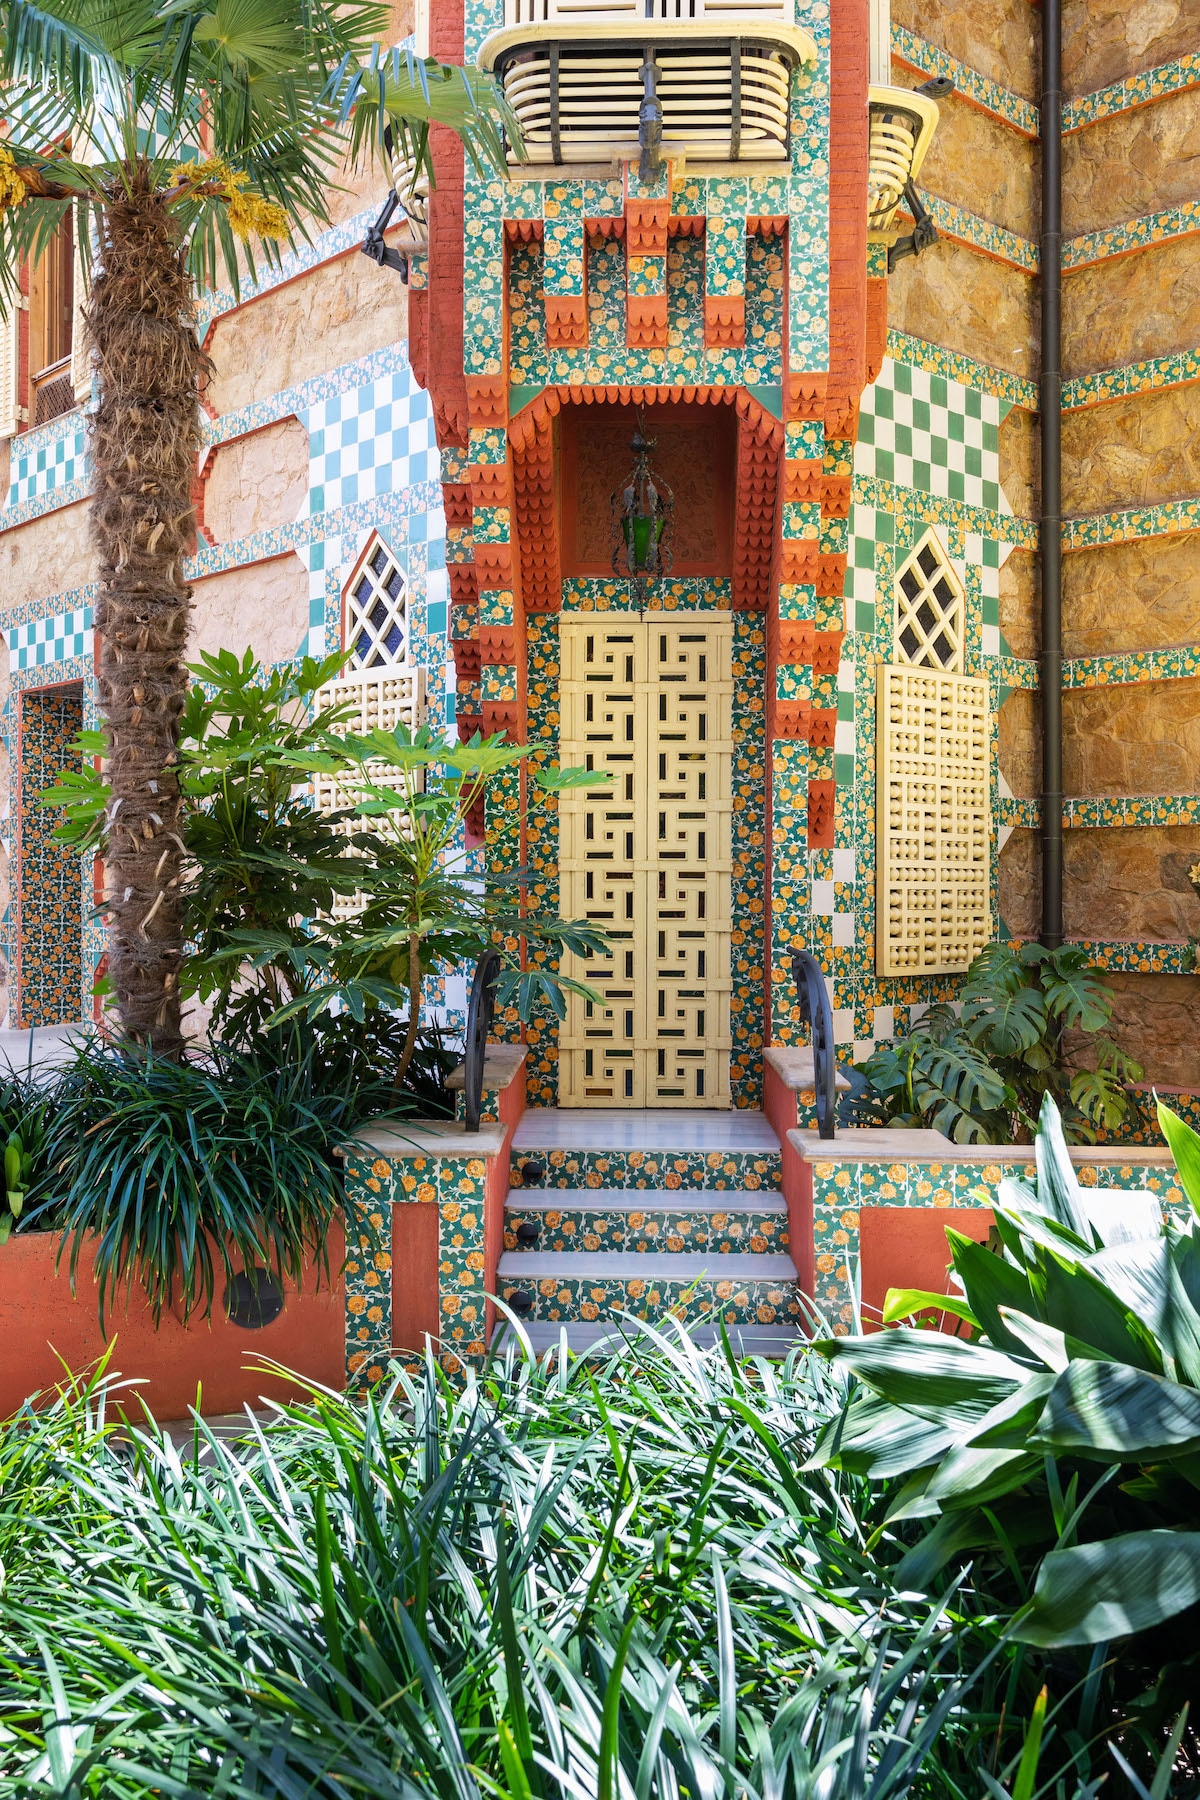 Casa Vicens by Antoni Gaudí on Airbnb